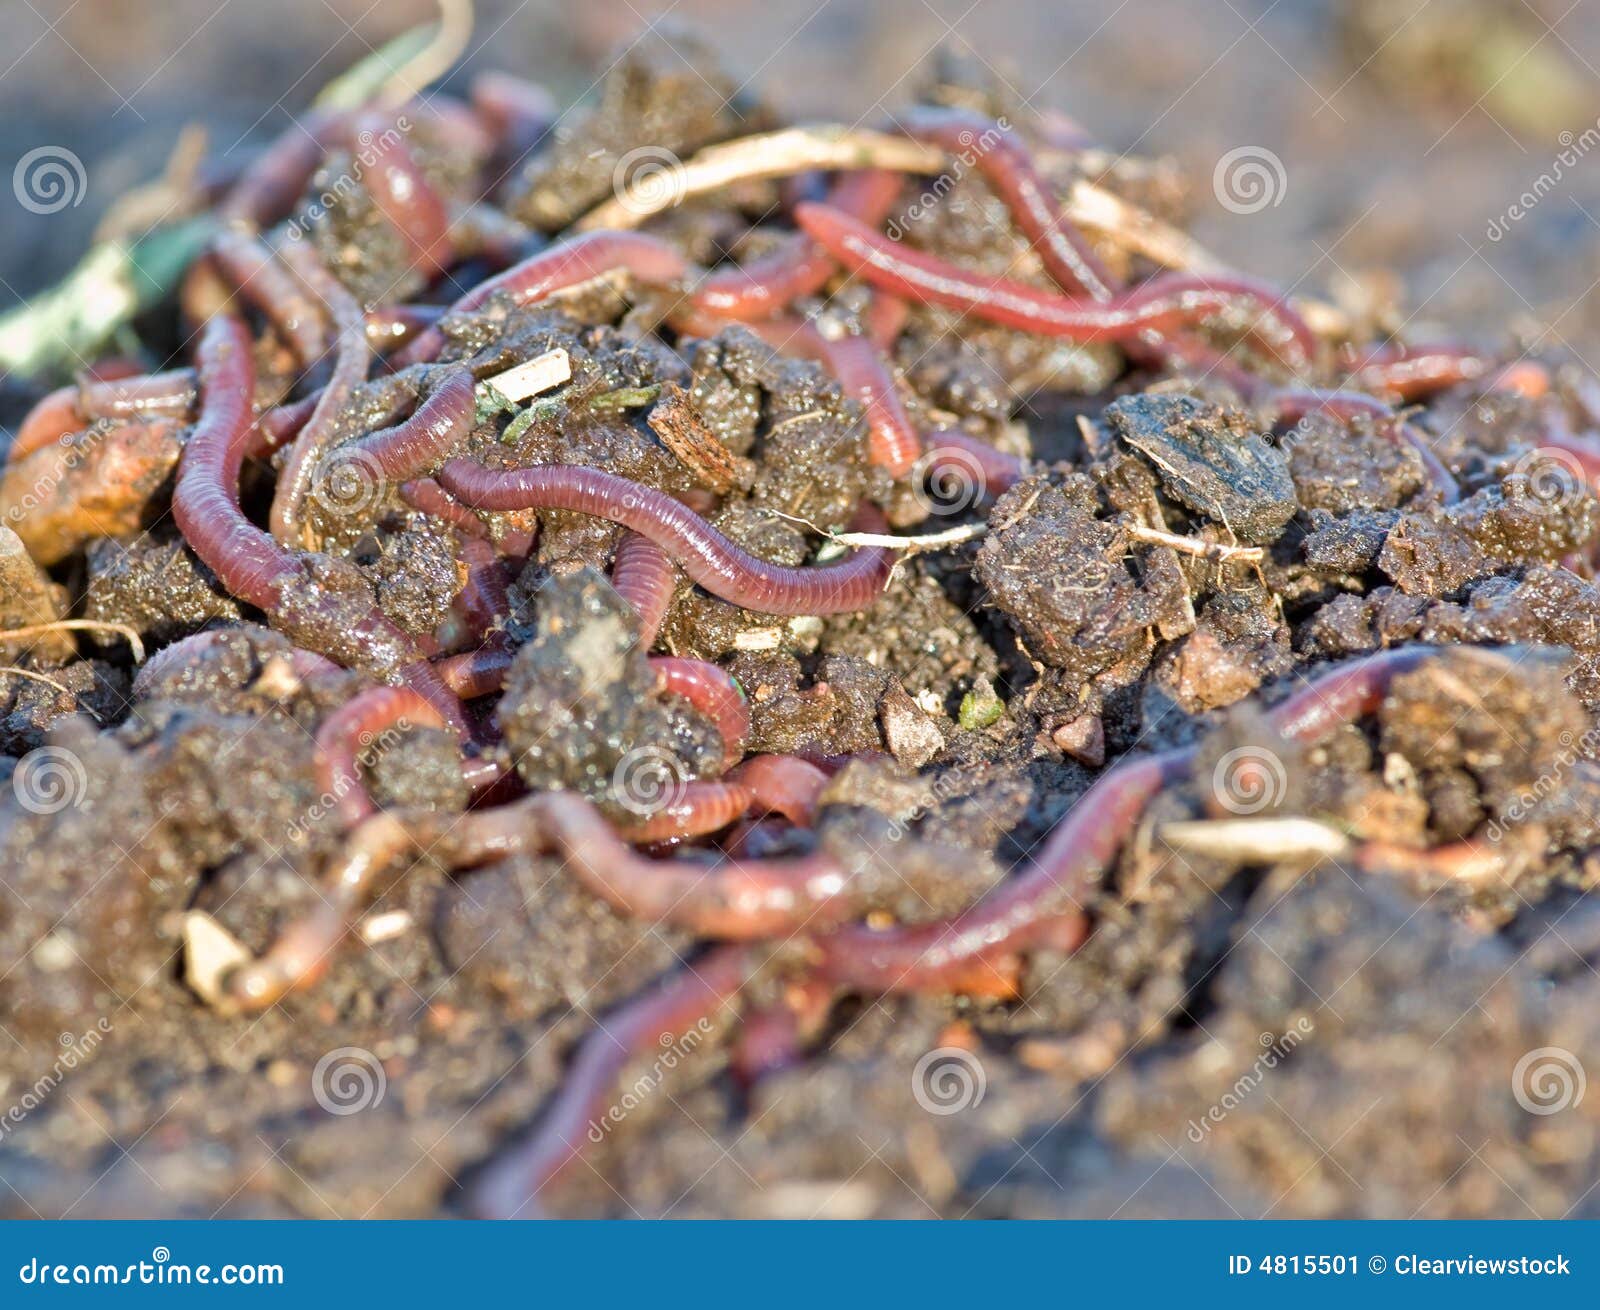 Garden Worms Stock Image Image Of Organic Garden Dirt 4815501